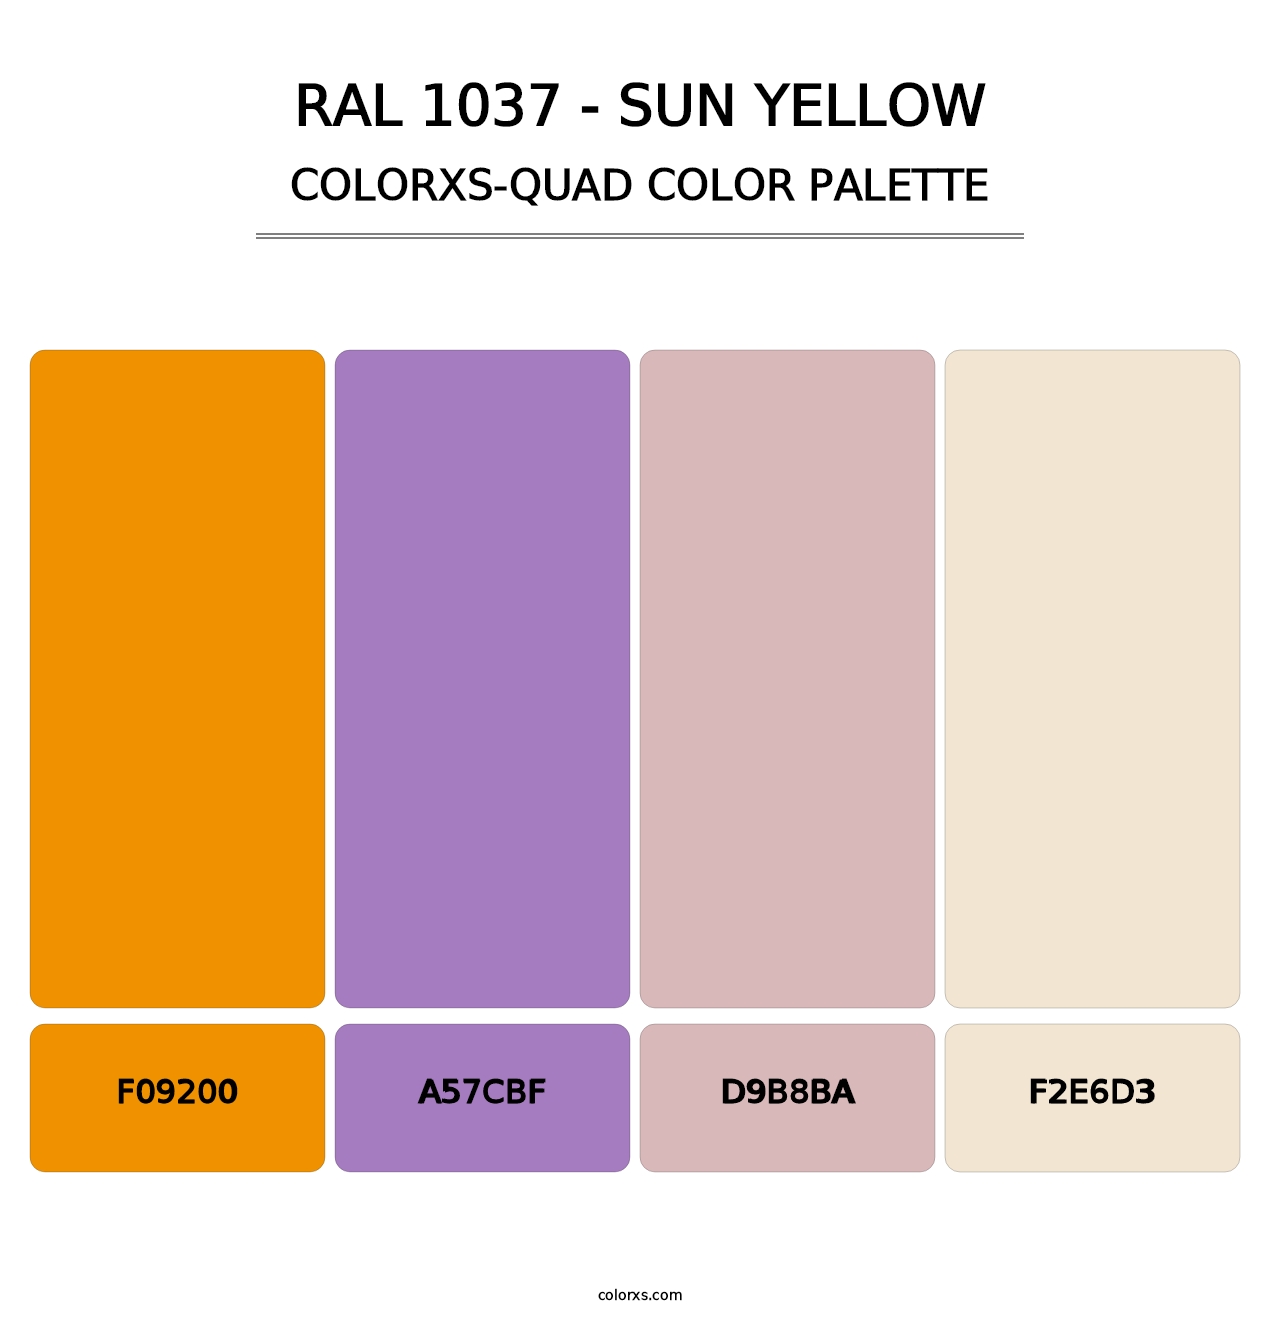 RAL 1037 - Sun Yellow - Colorxs Quad Palette